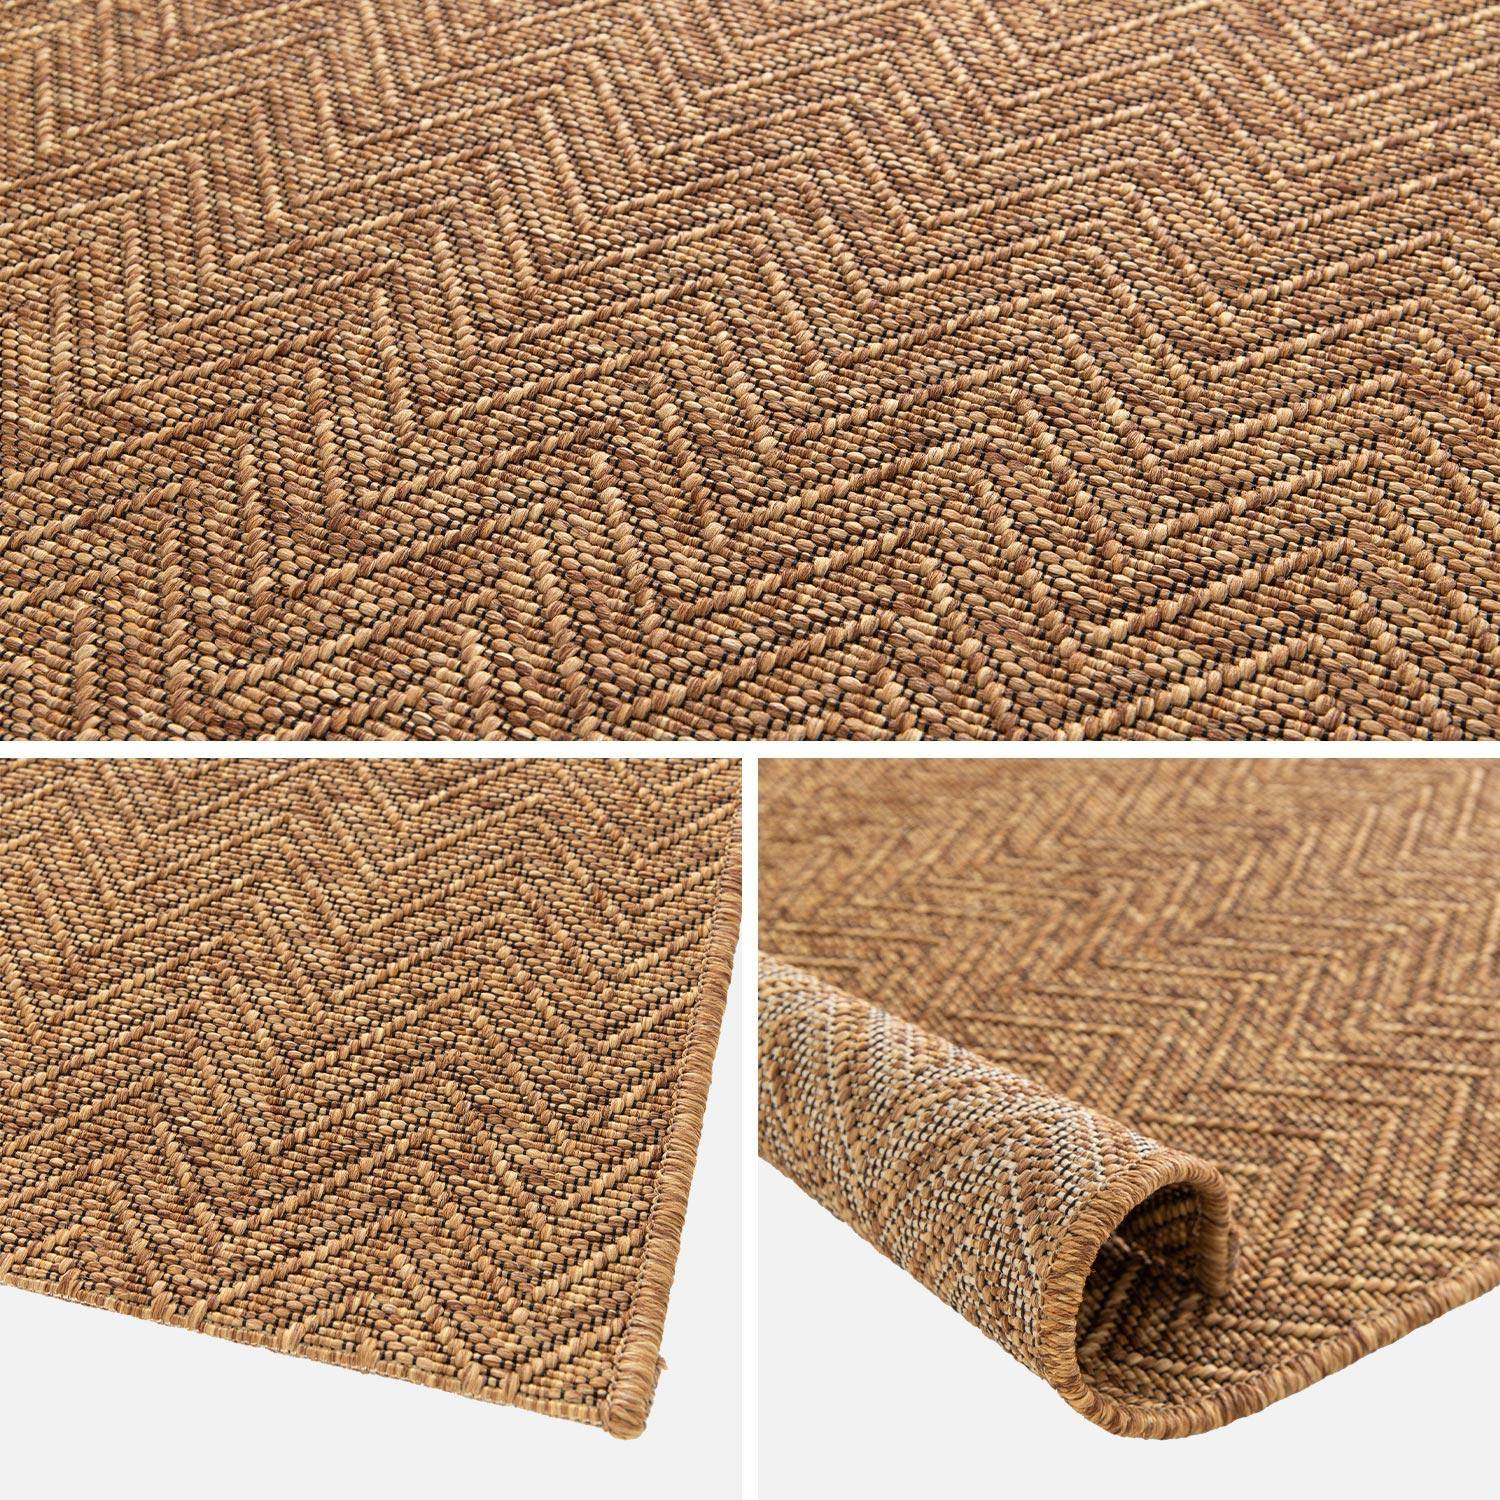 Jute-effect indoor/outdoor carpet in caramel, Oliver, 160 x 230 cm Photo5